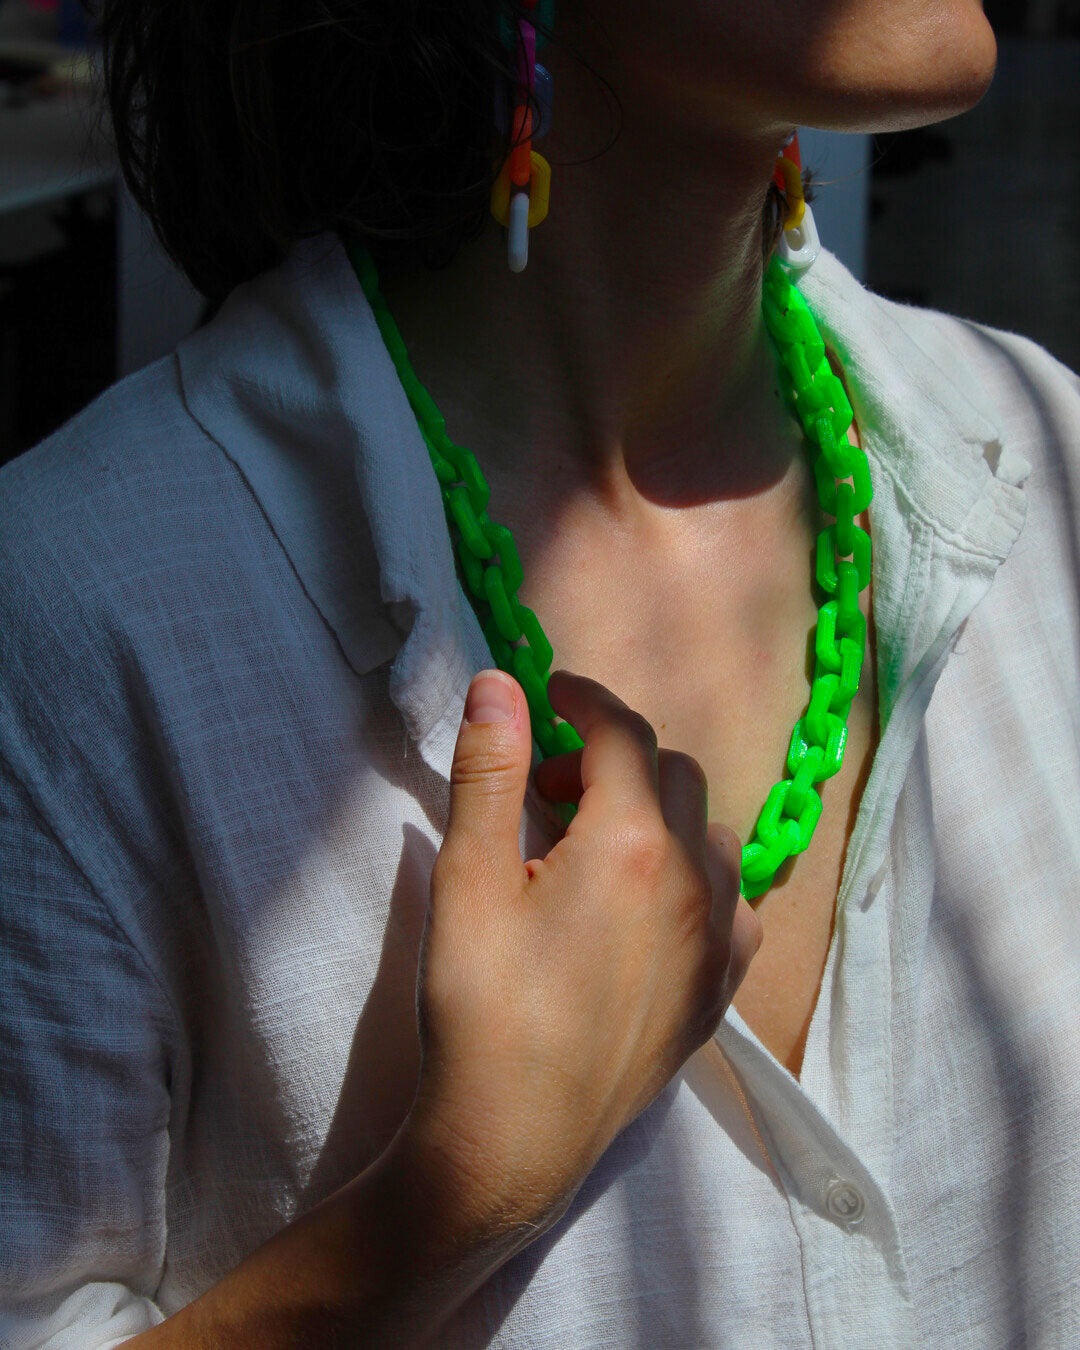 Handmade bio plastic colorful chain necklace - Rahrah